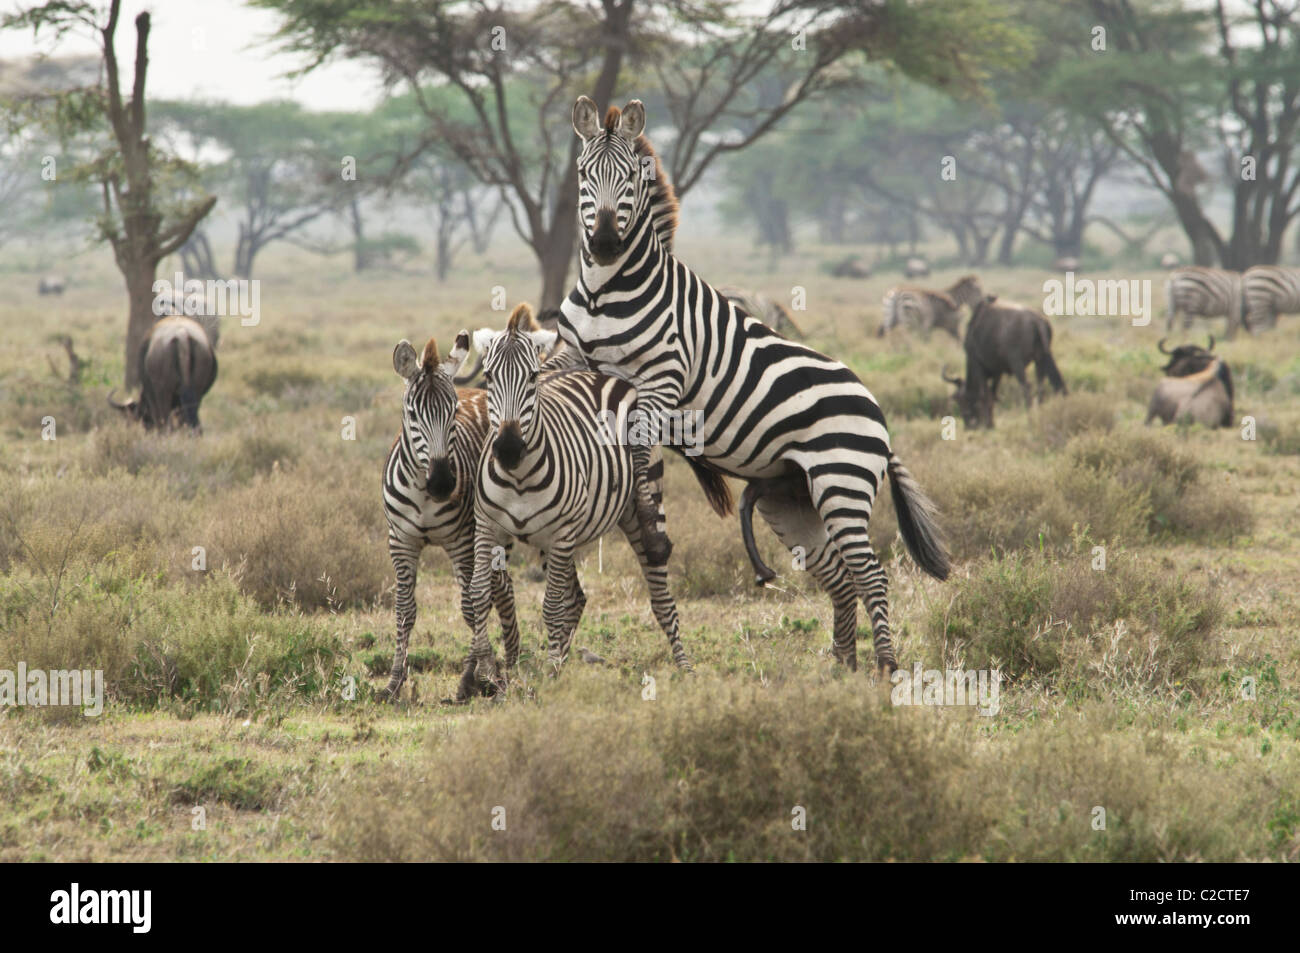 Stock photo of a zebra stallion breeding. Stock Photo